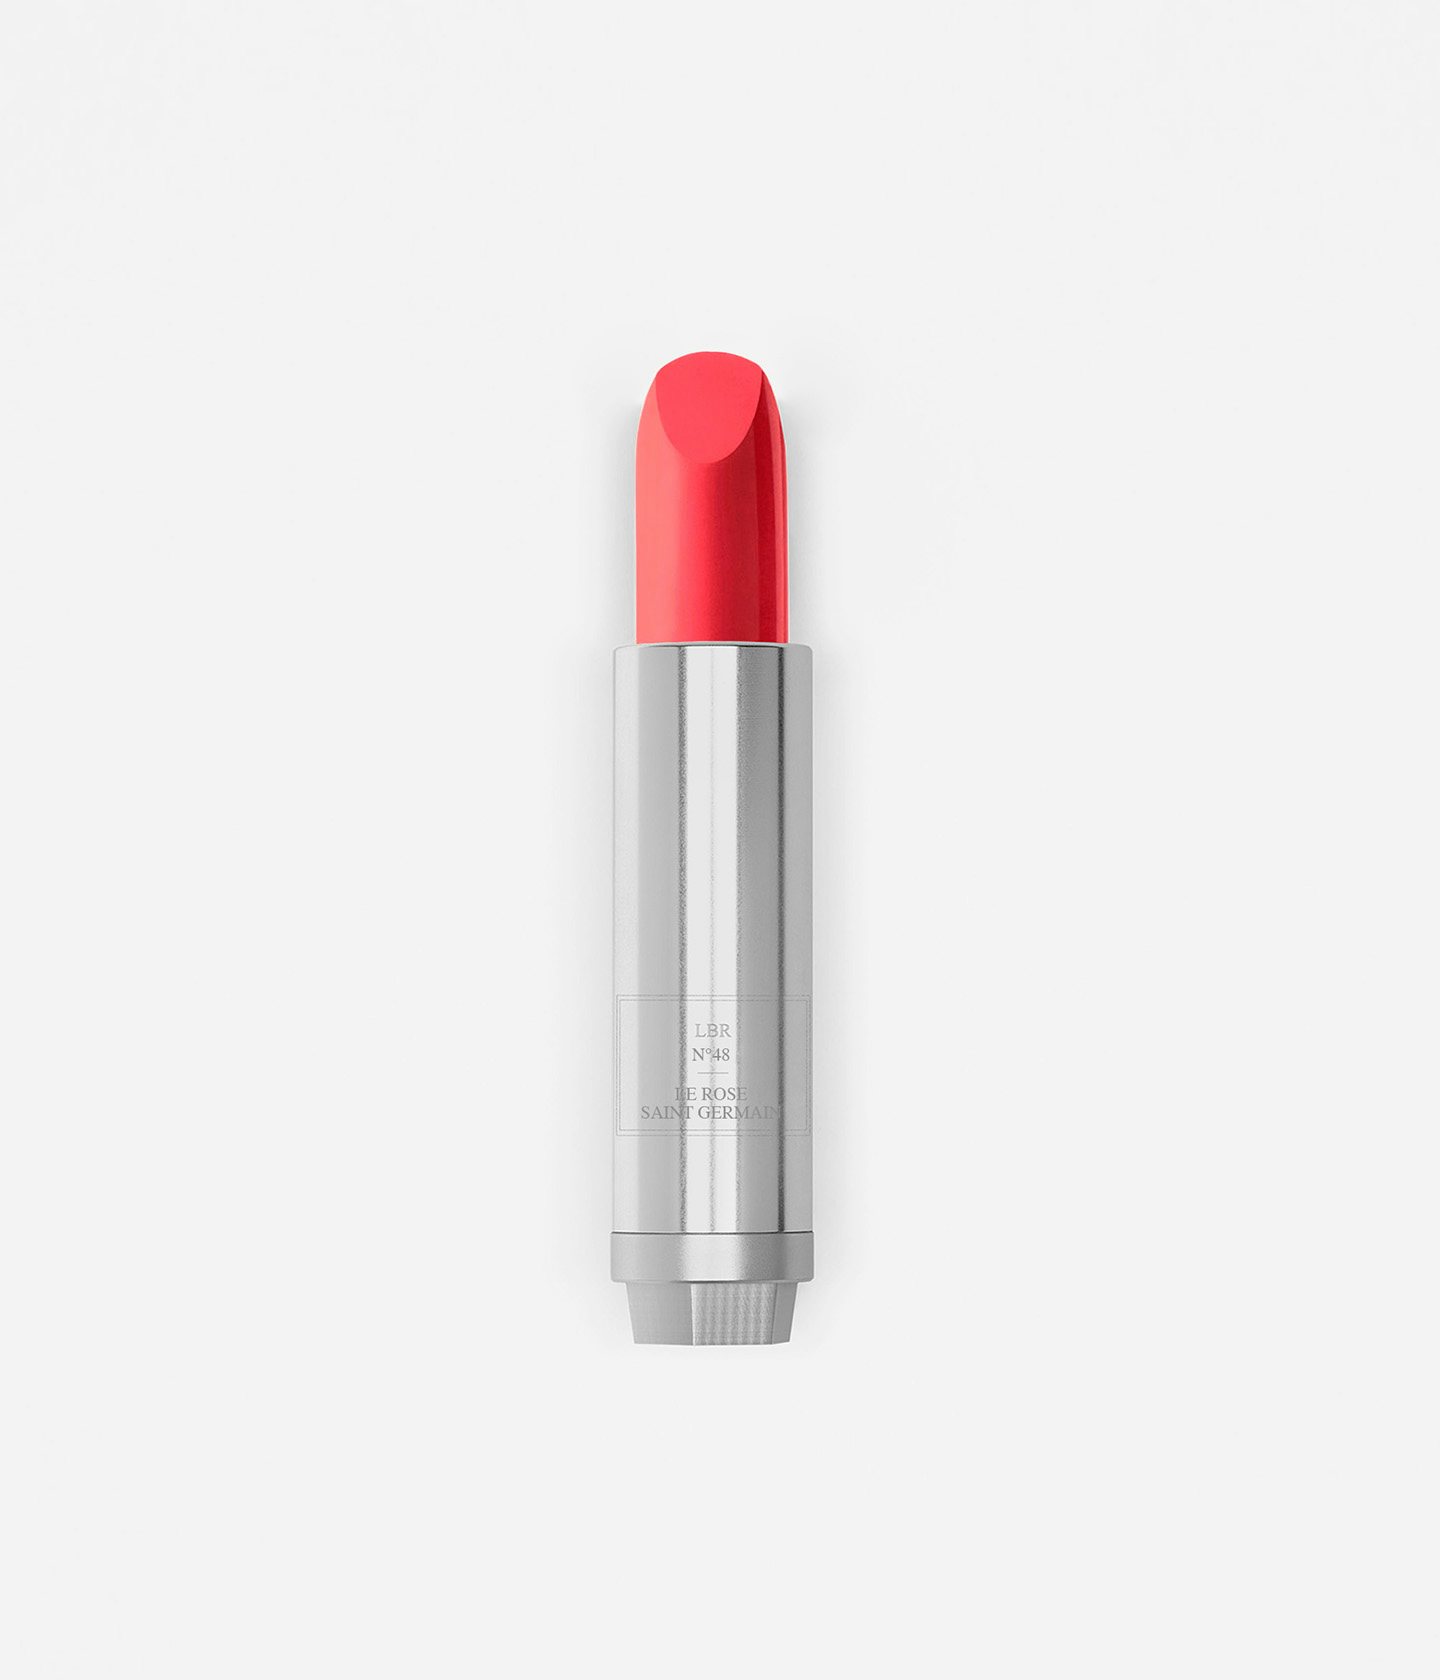 La bouche rouge Le Rose Saint Germain lipstick in metal refill